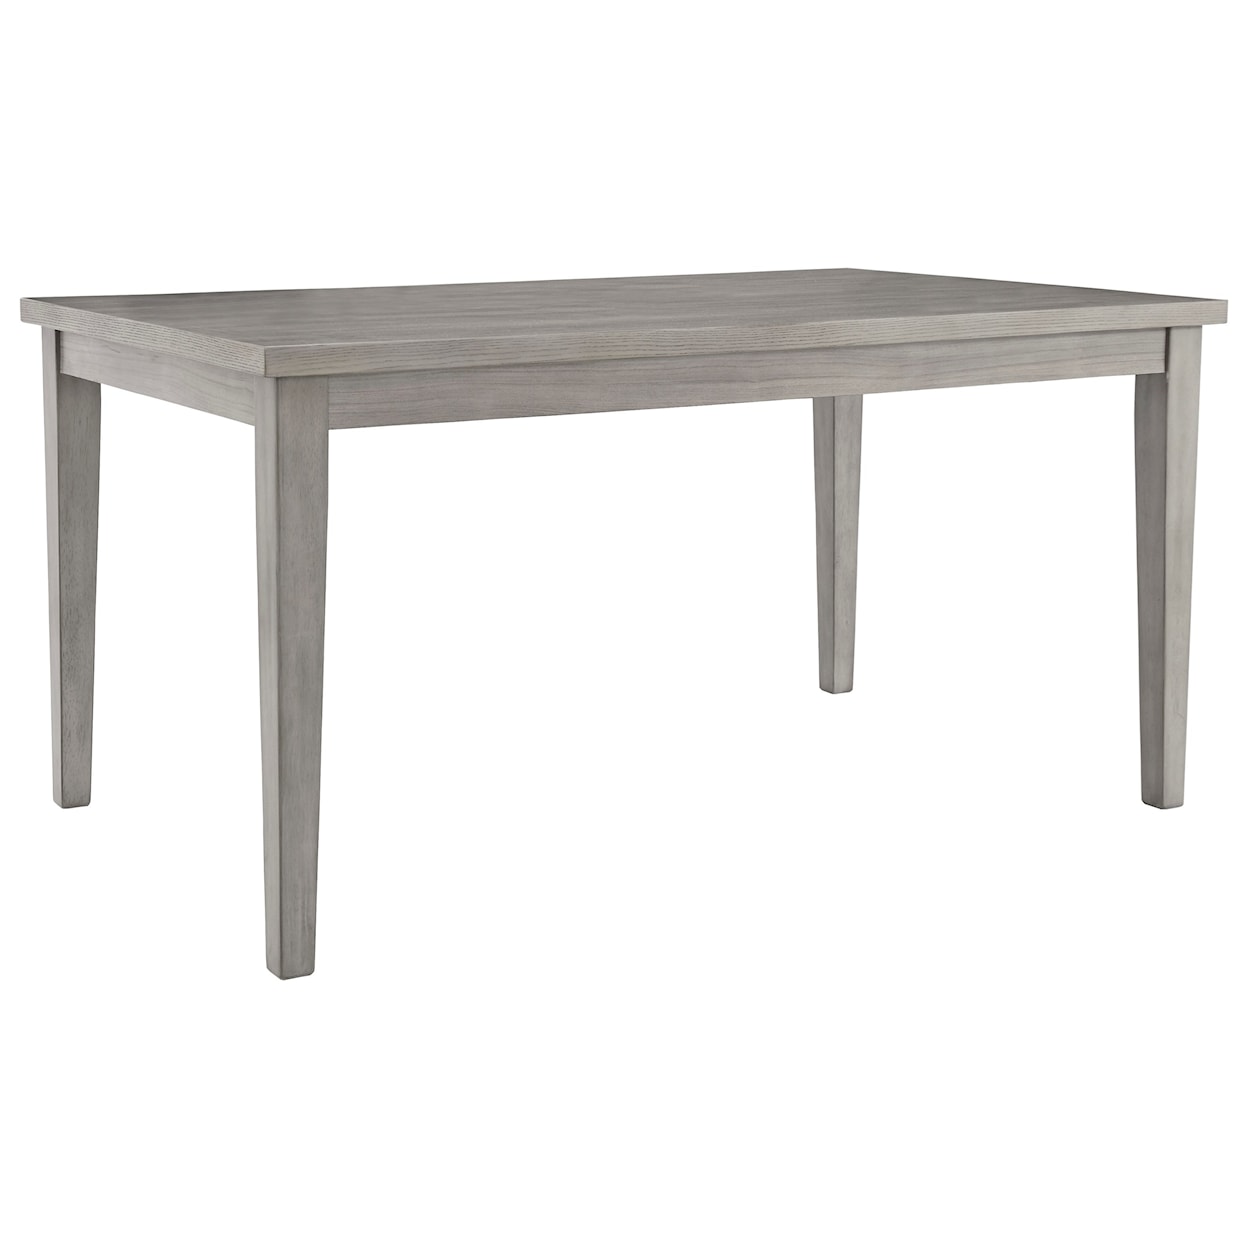 Ashley Furniture Signature Design Parellen 5-Piece Table and Chair Set